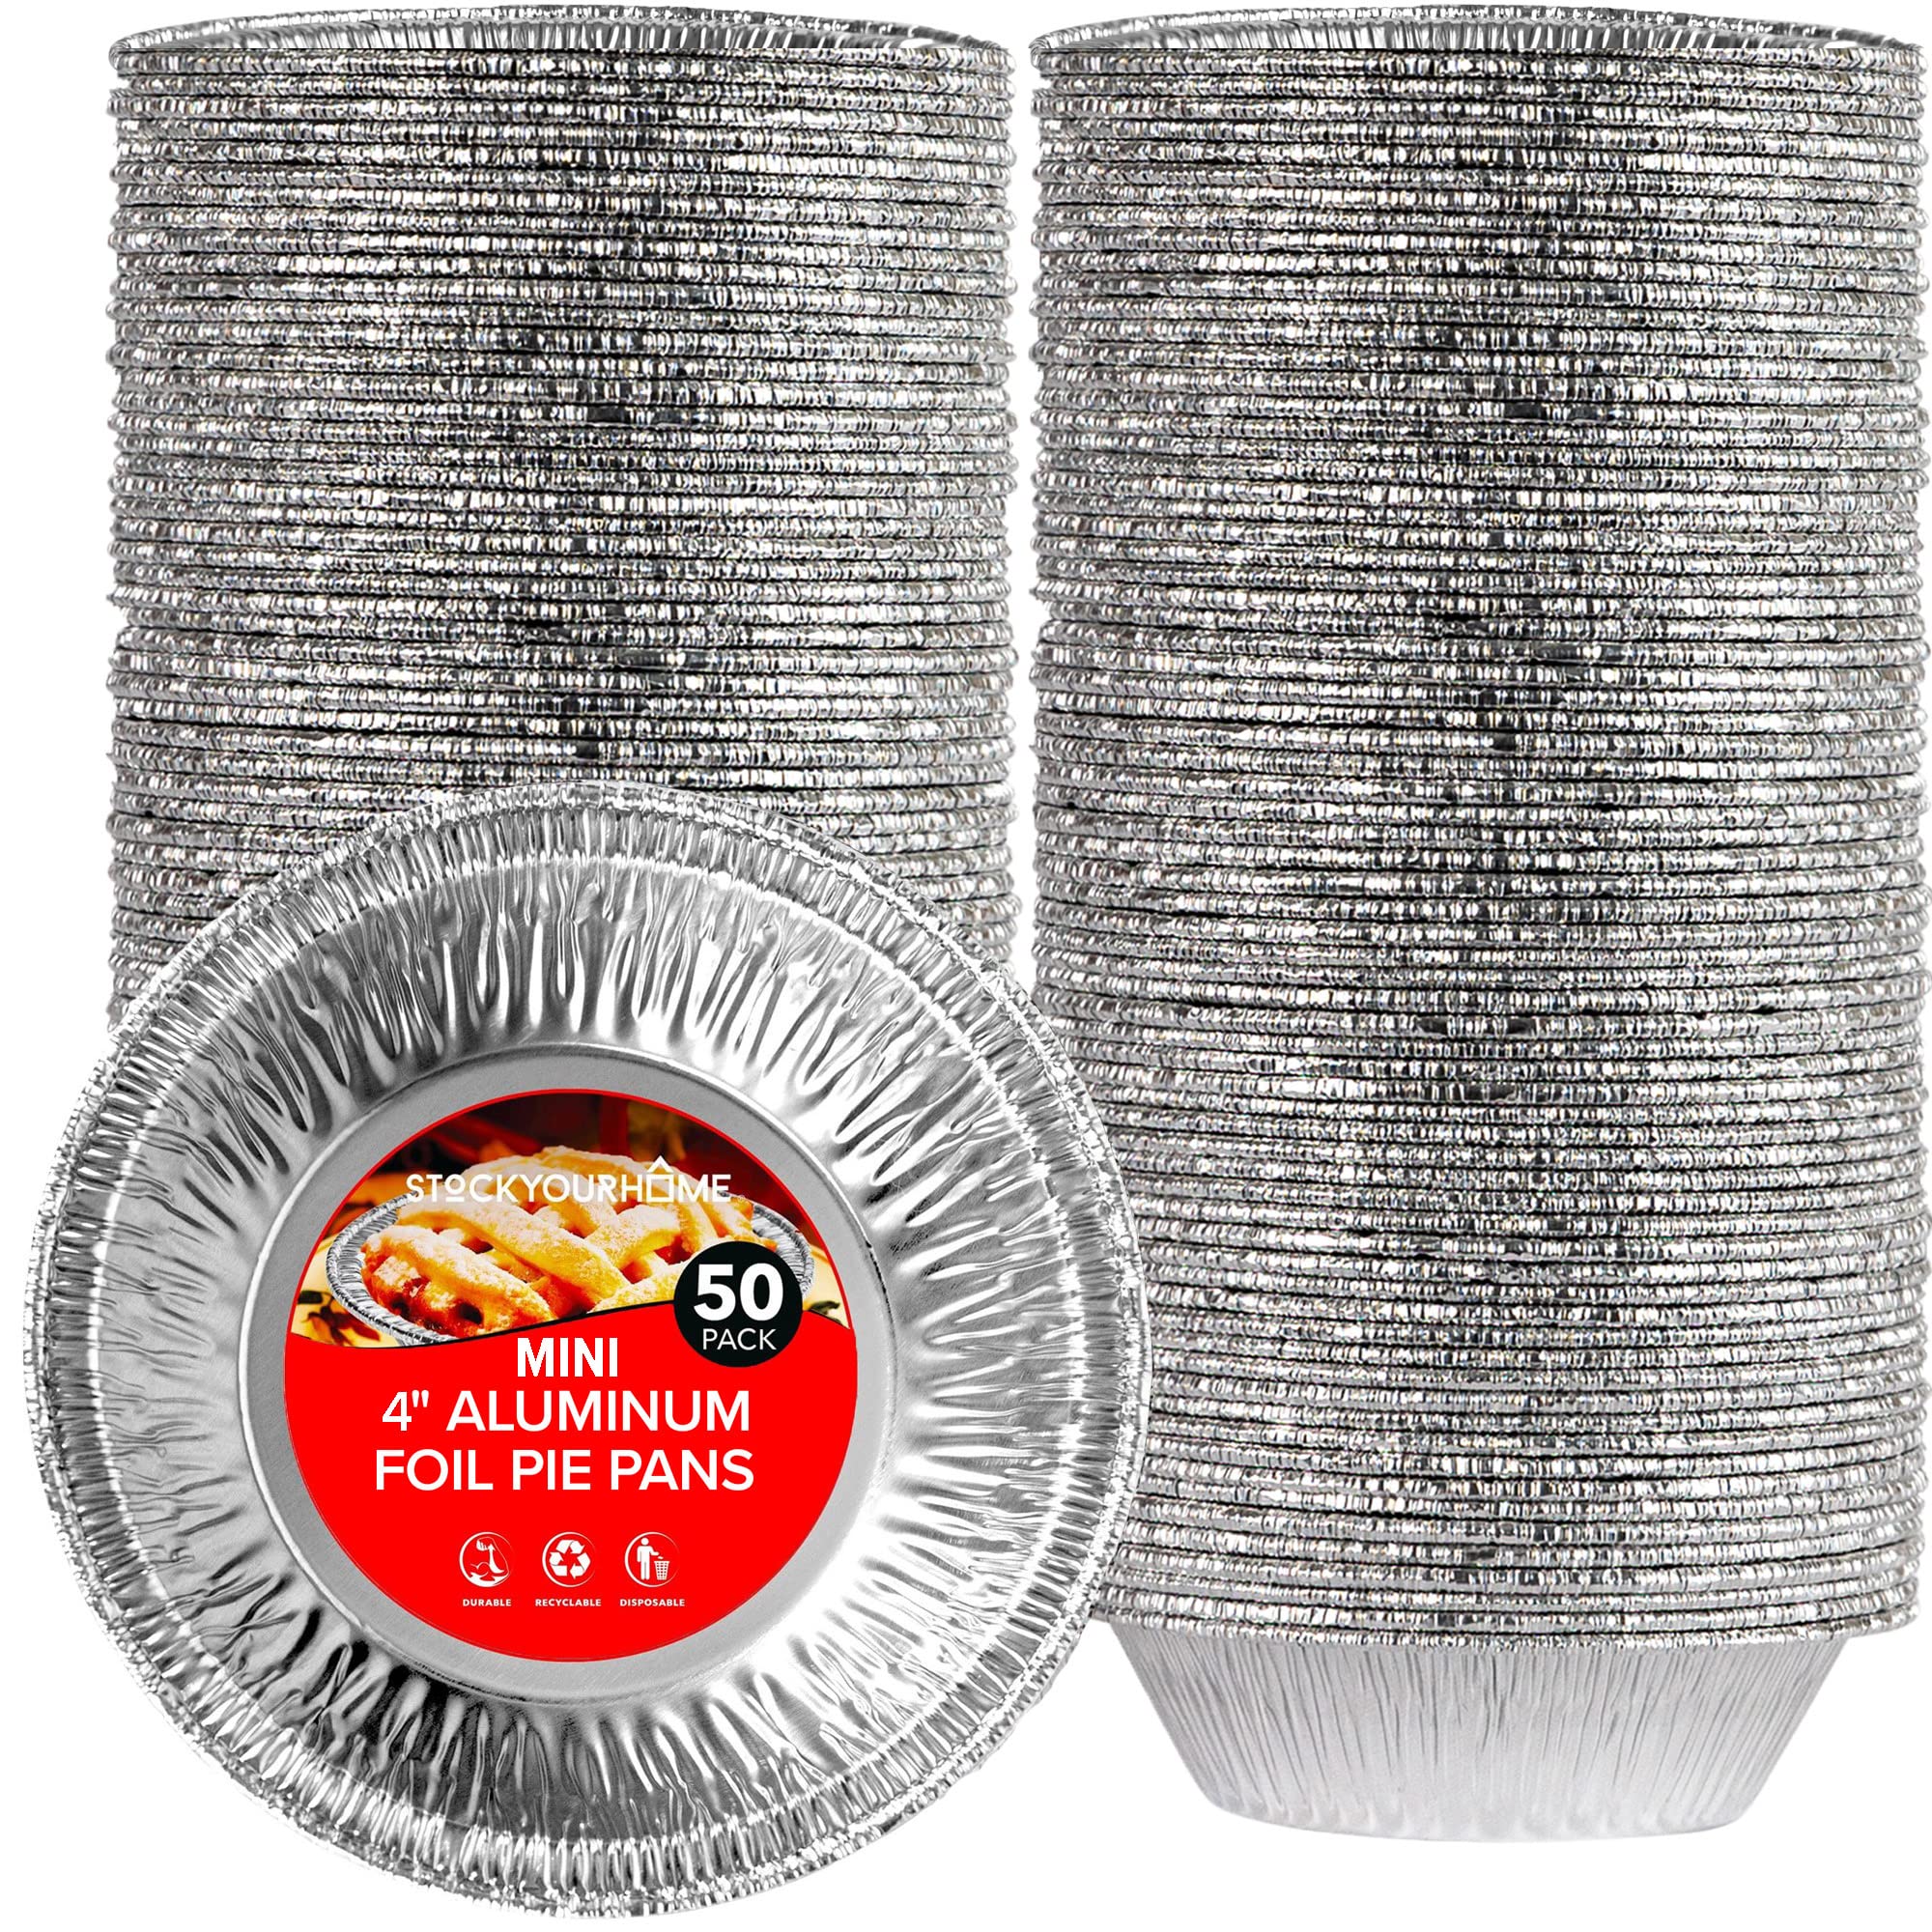 Stock Your Home 4 Inch Aluminum Foil Pie Pans (50 count) - Disposable  Recyclable Mini Pie Pans - Small Pie Tins For Bakeries, c